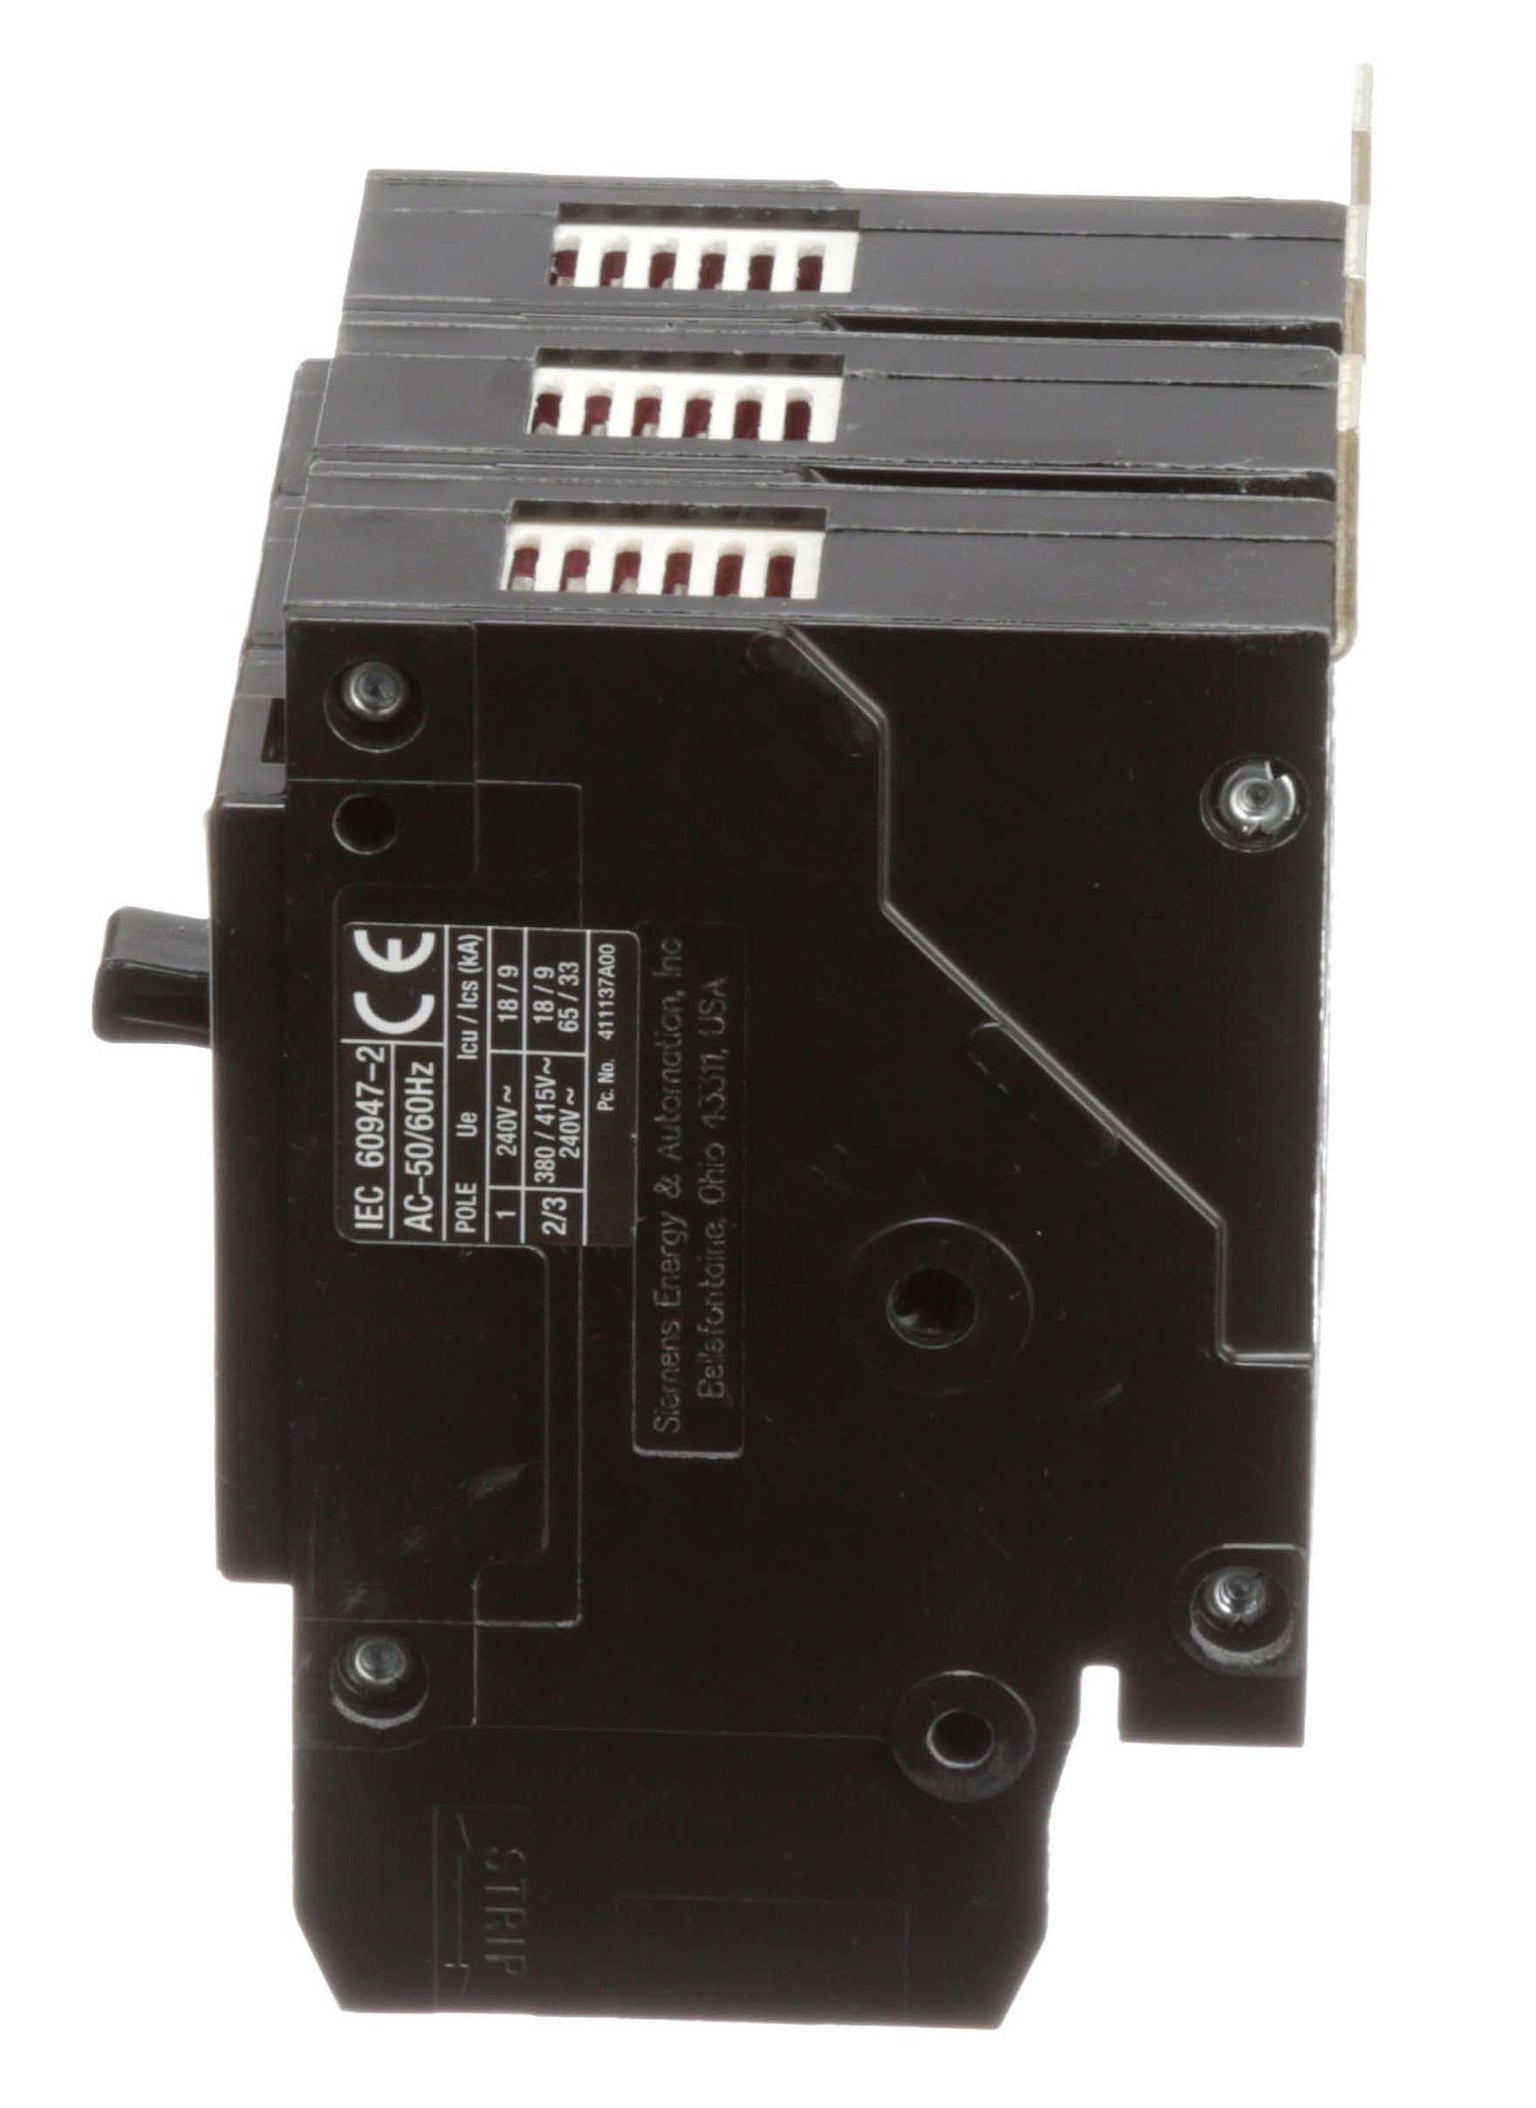 BQD6370 - Siemens - 70 Amp Molded Case Circuit Breaker